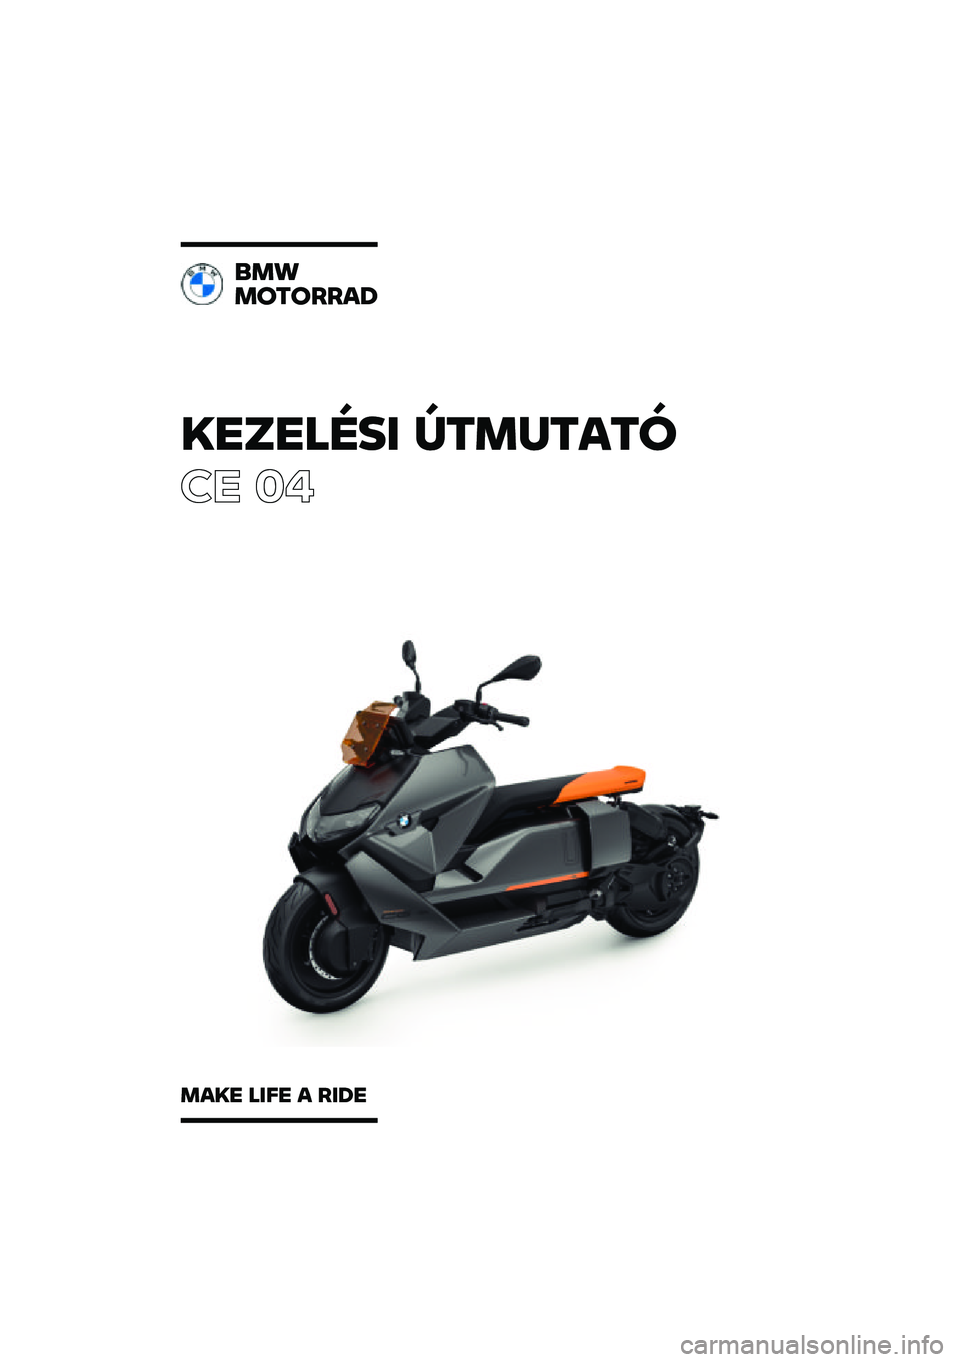 BMW MOTORRAD CE 04 2021  Kezelési útmutató (in Hungarian) �������\b�	 �
�\f�
��\f��\f�
�� ��
��
�
�
��\f�����
�
��� ��	�� � ��	�� 